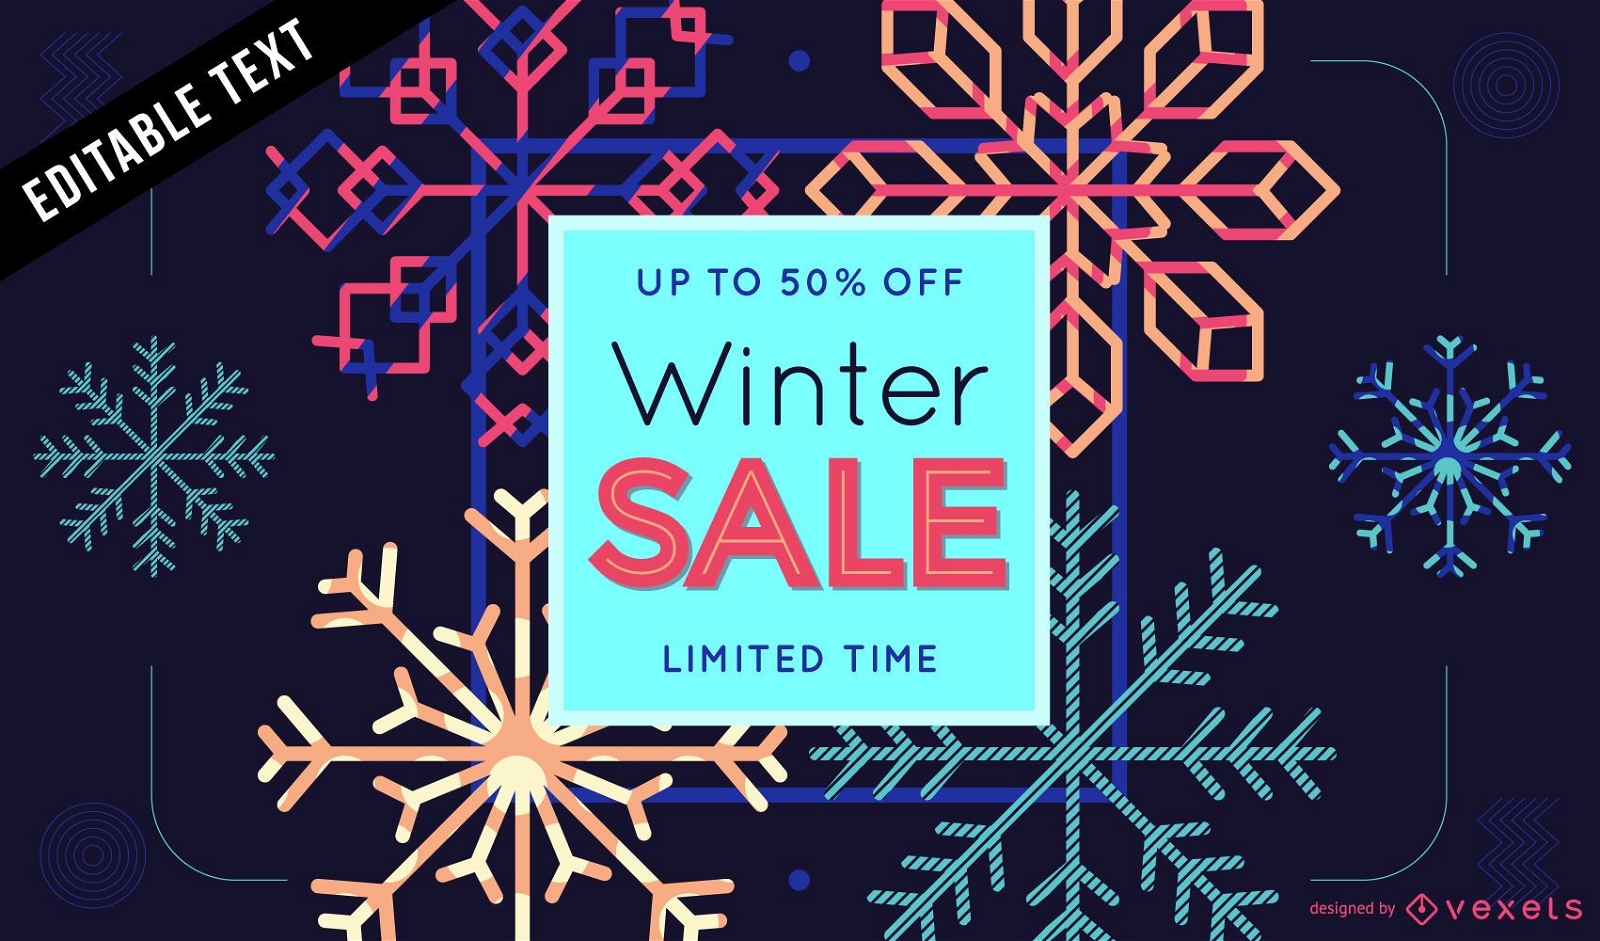 Winter Sale poster design